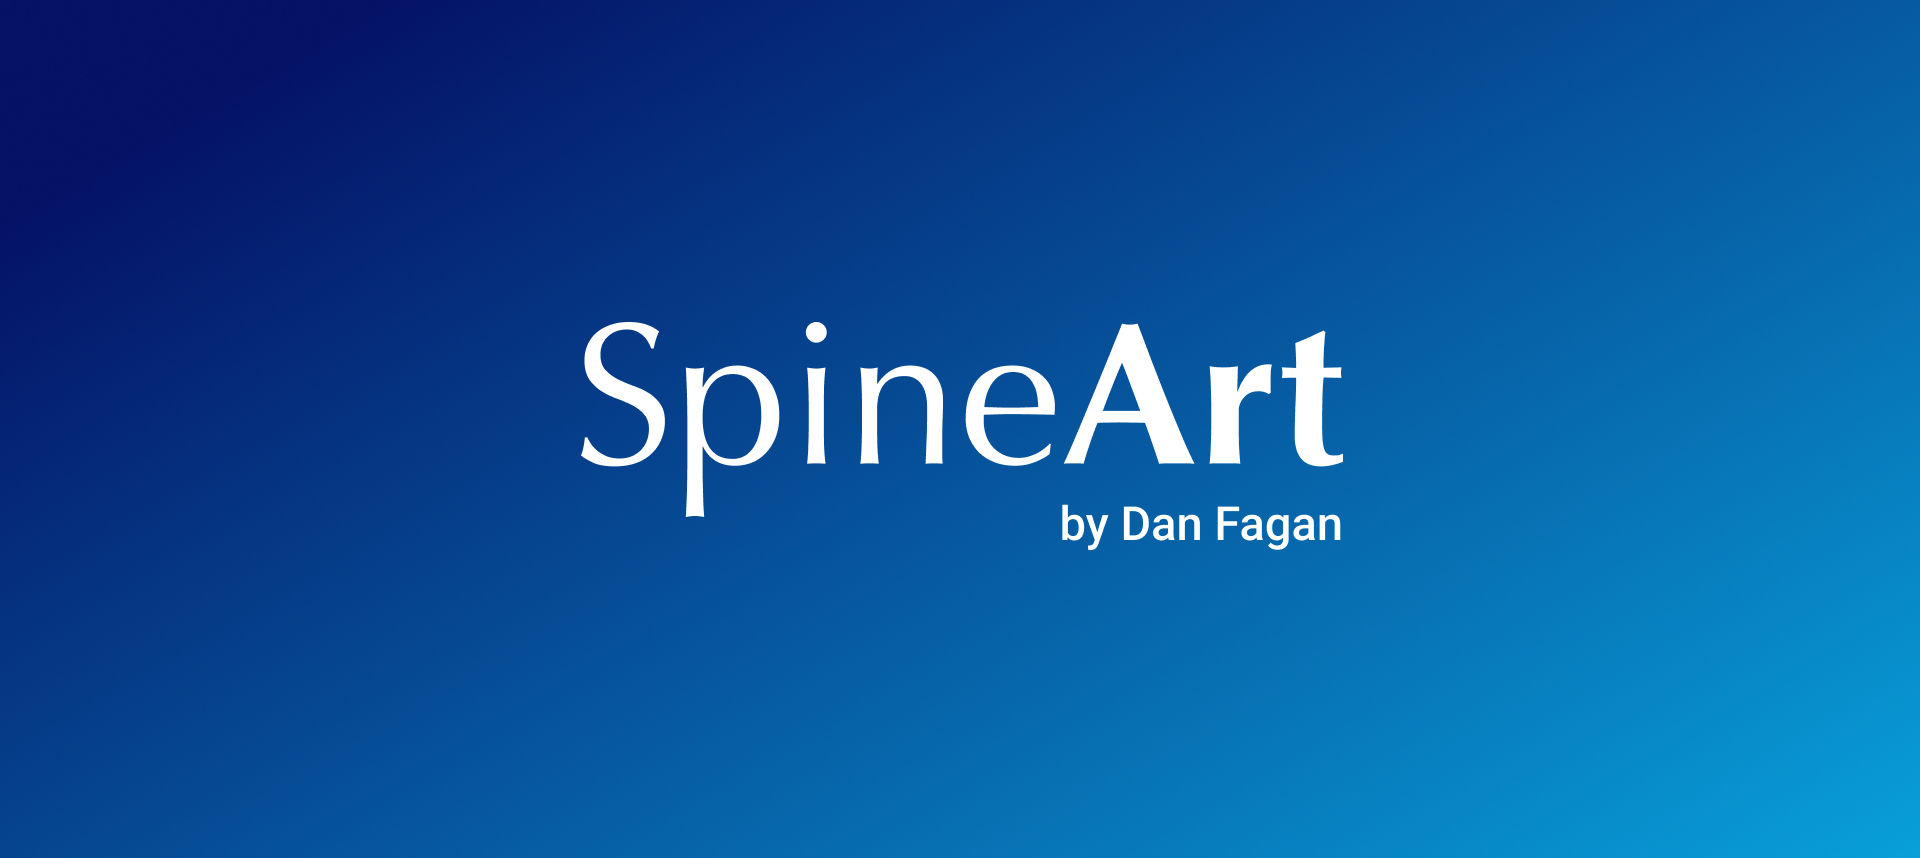 Spine Art in print